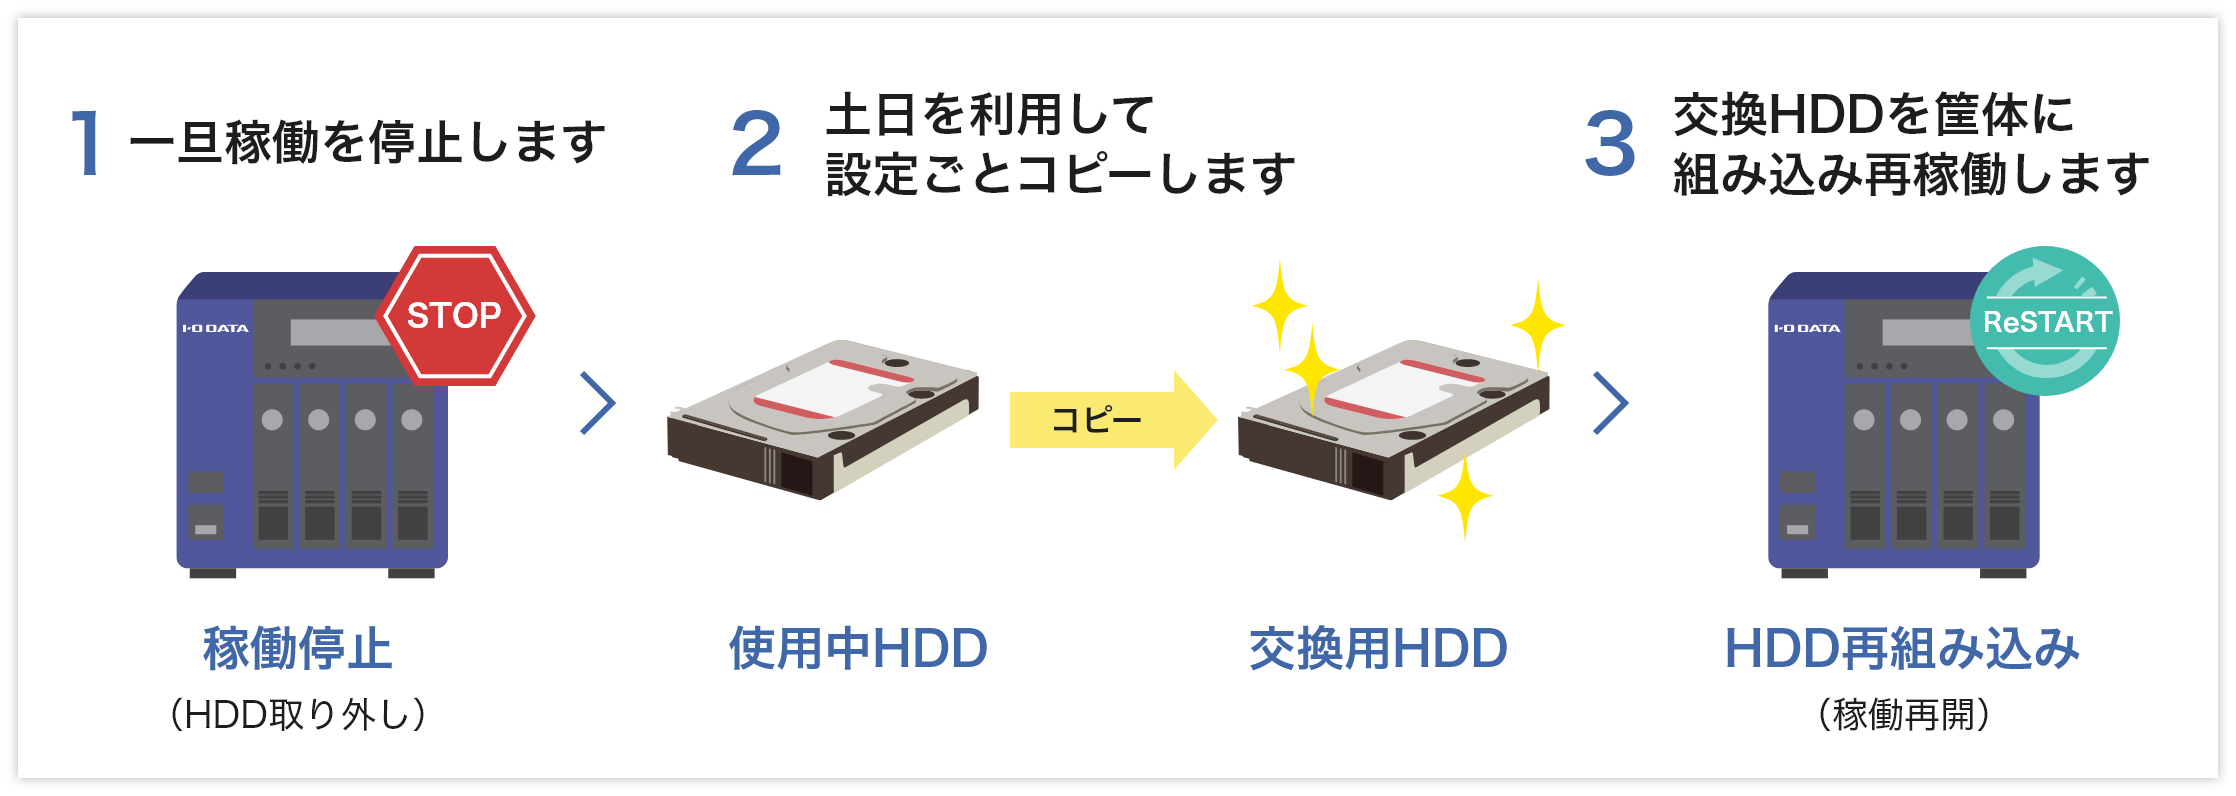 HDD定期交換の流れ